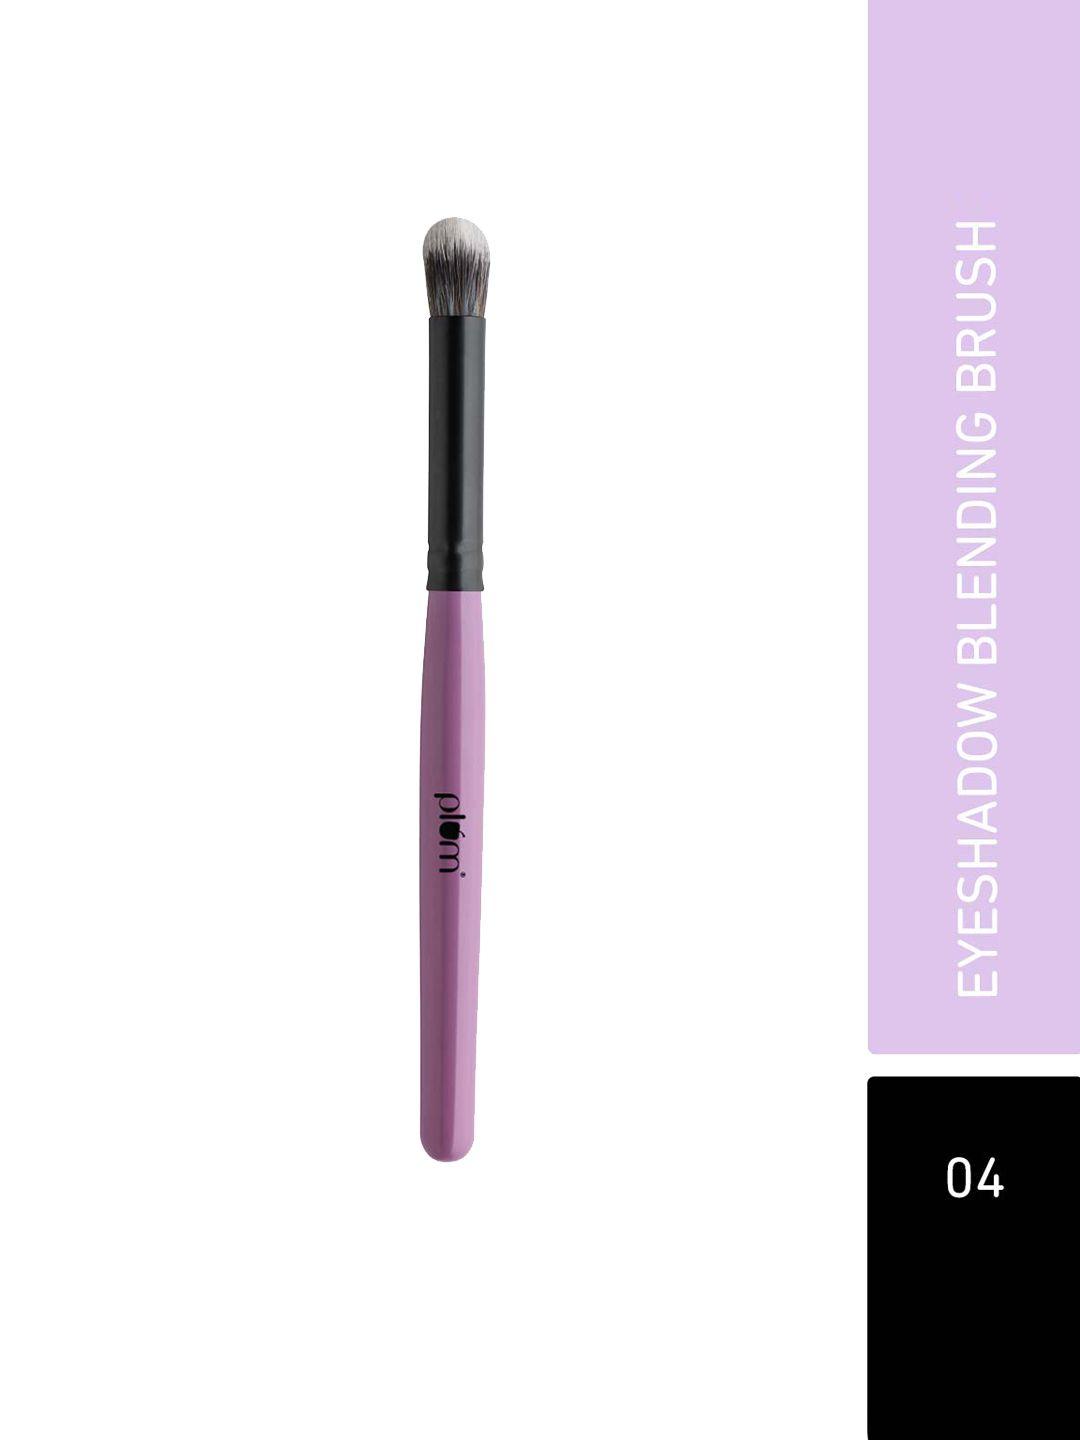 plum soft blend eyeshadow blending brush with ultra soft bristles - no. 04